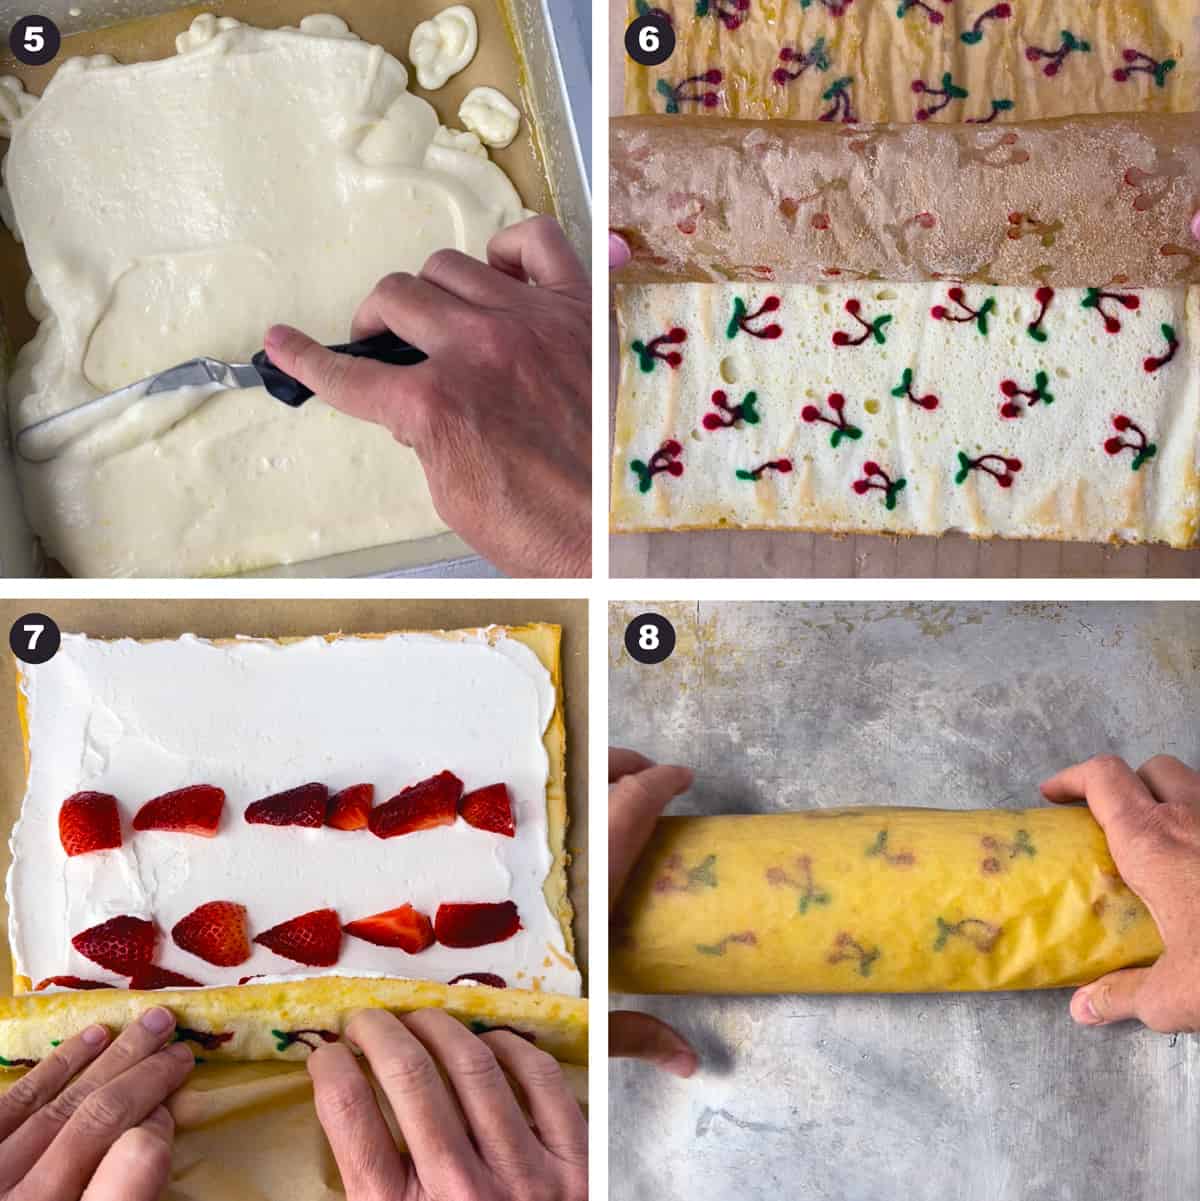 Four photos show how to make a cake roll with cherry design.